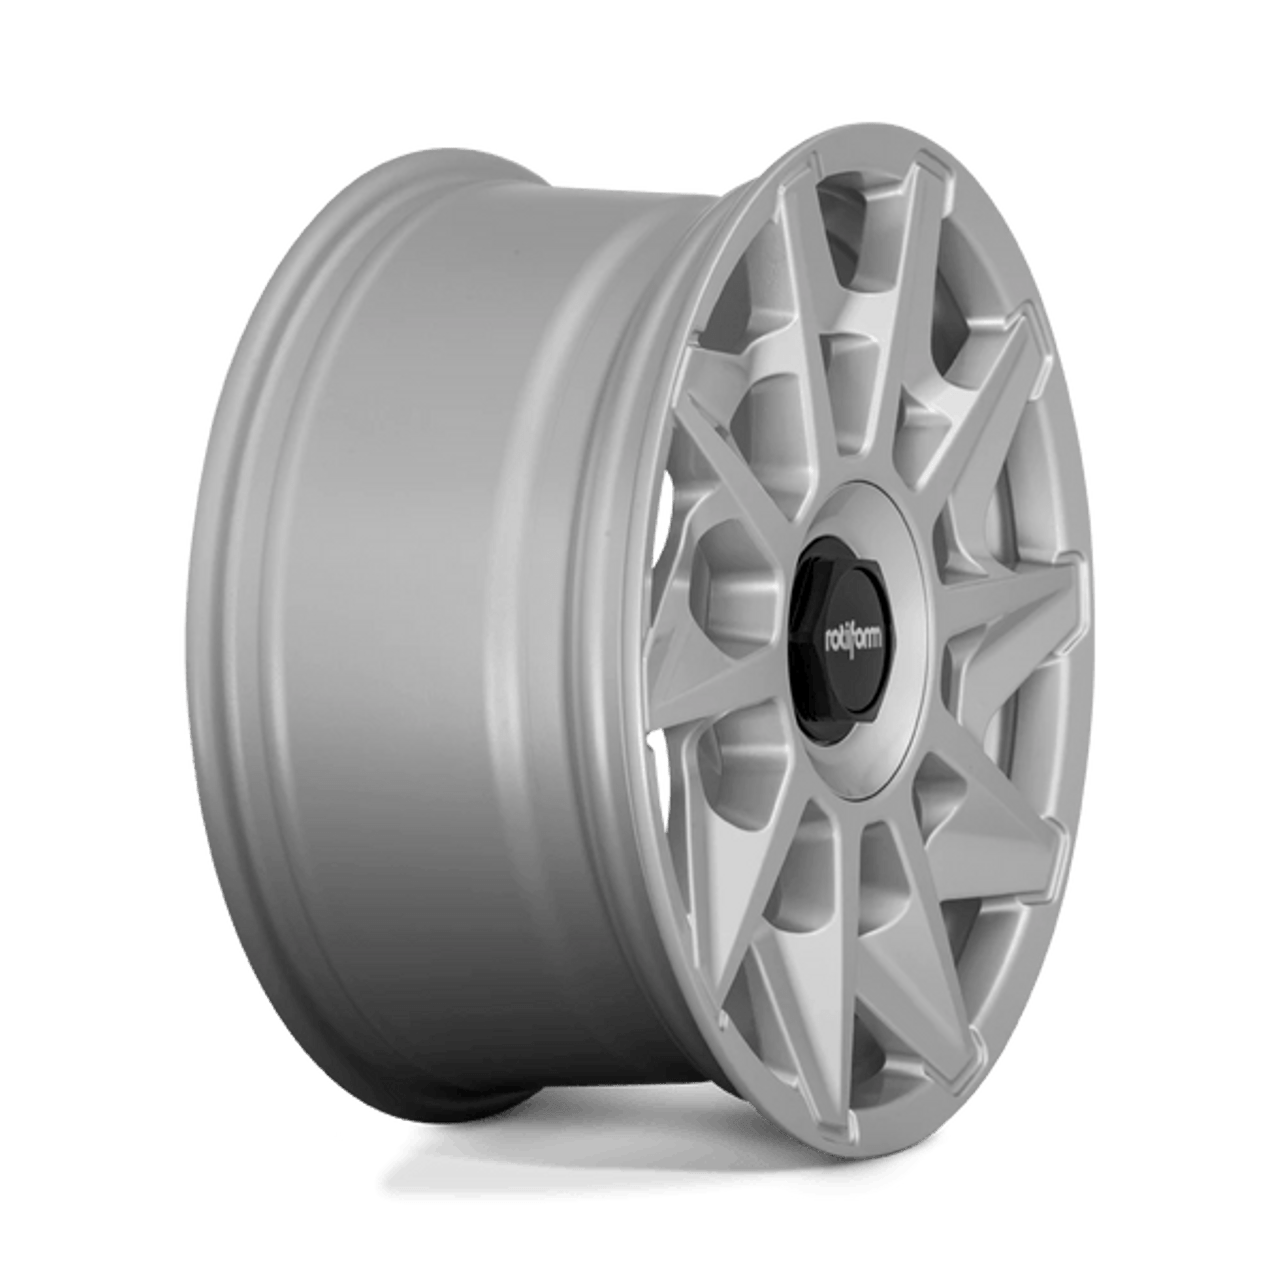 Rotiform R124 CVT Wheel 19x8.5 Blank 45 Offset - Gloss Silver